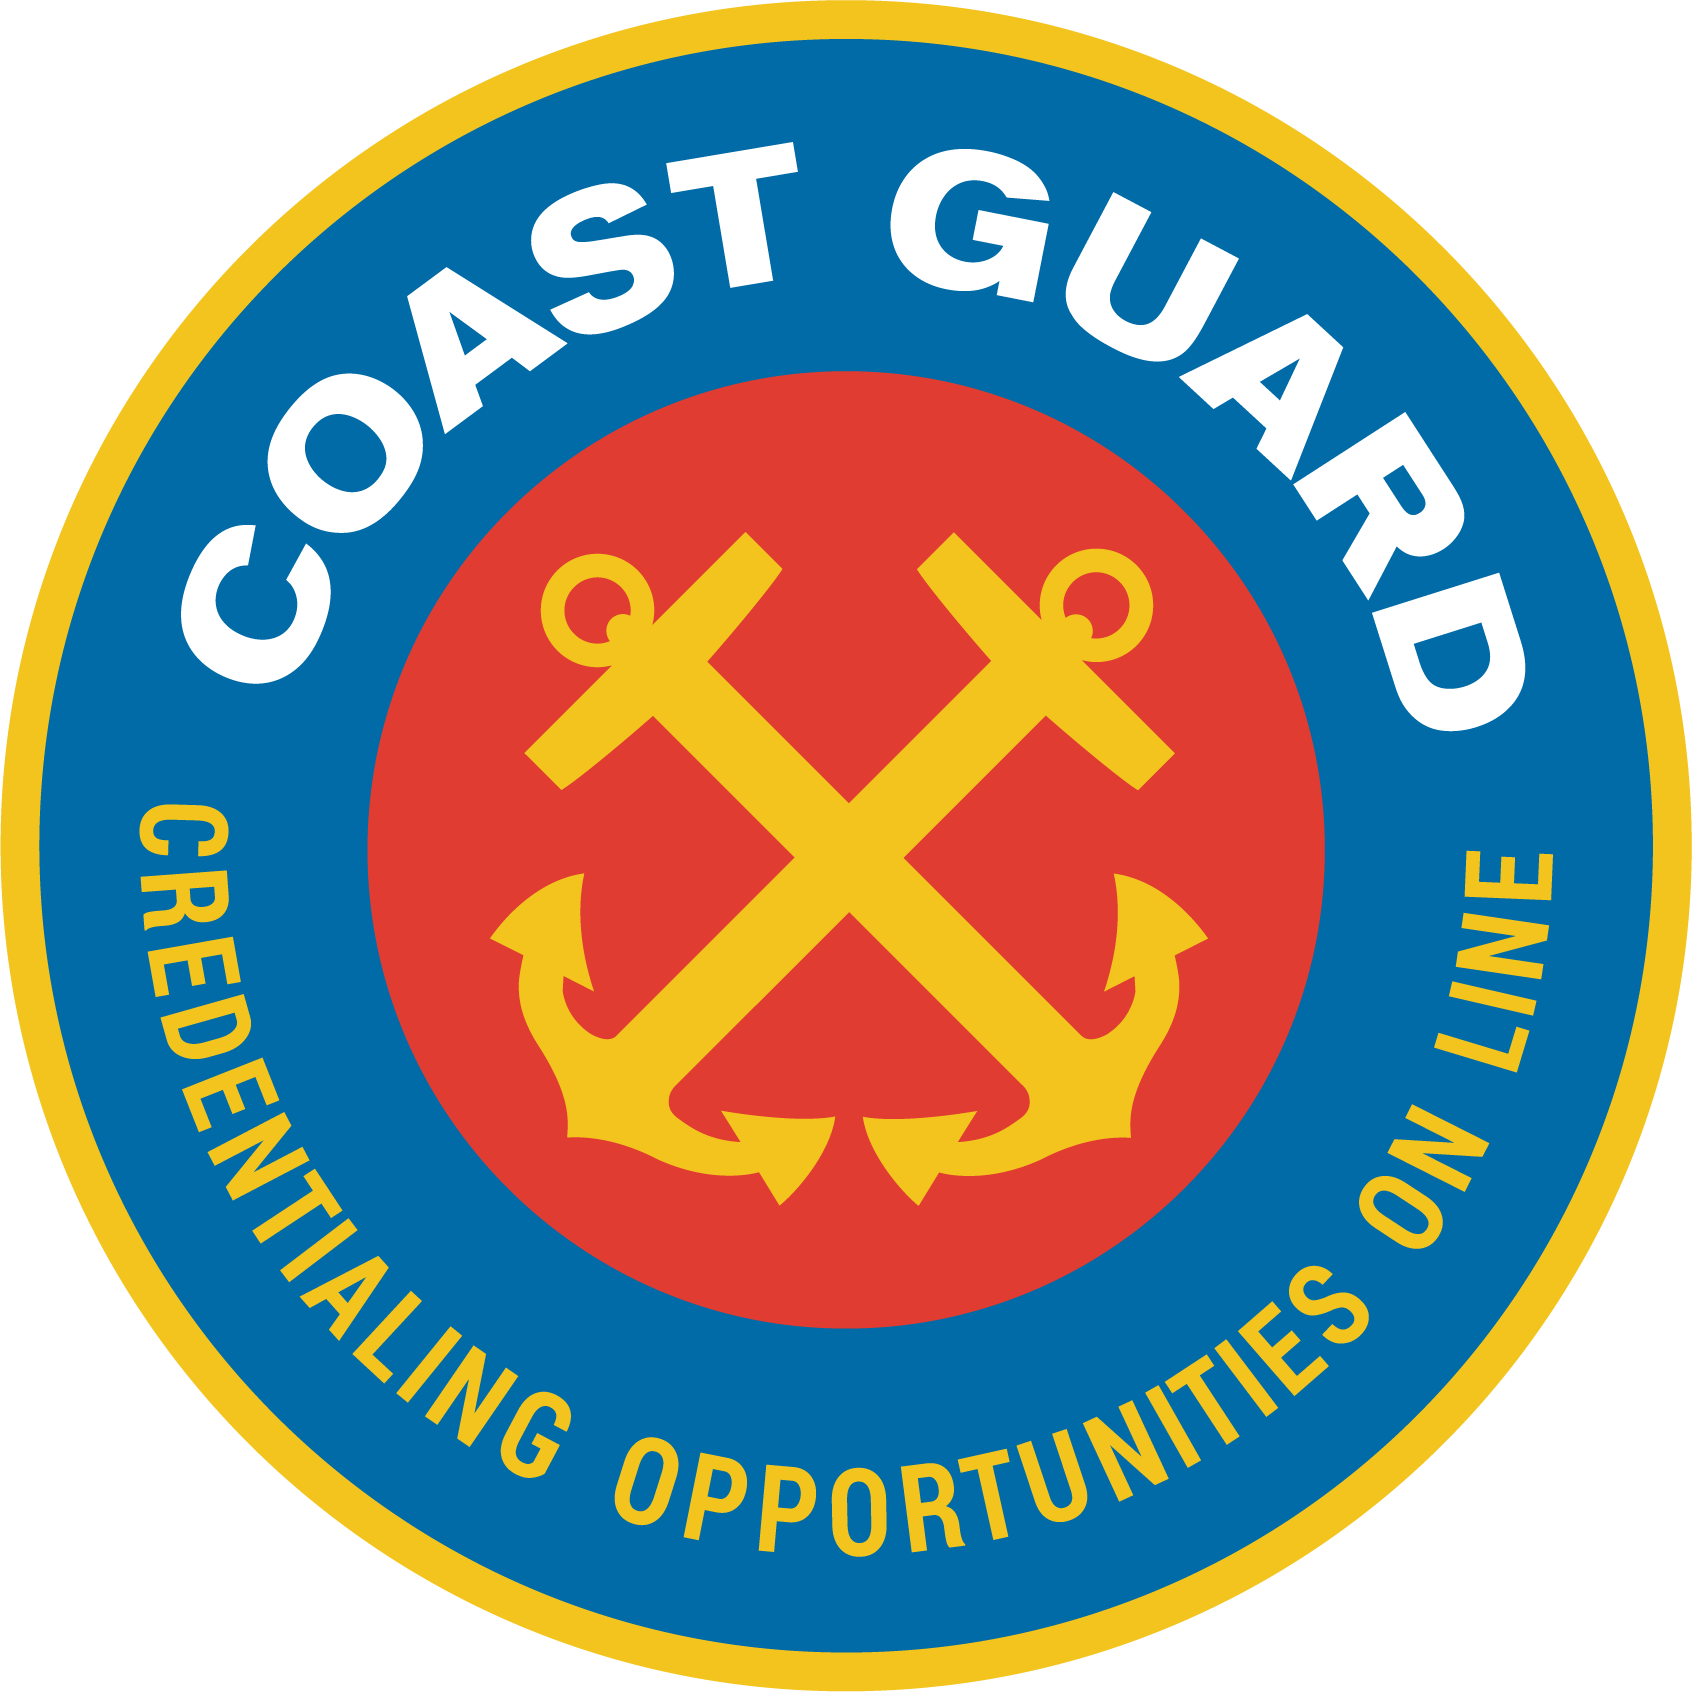 data-cke-saved-src=https://protraincg.theknowledgebase.org/CMS/Index/1553/Coast-Guard-COOL-badge.png